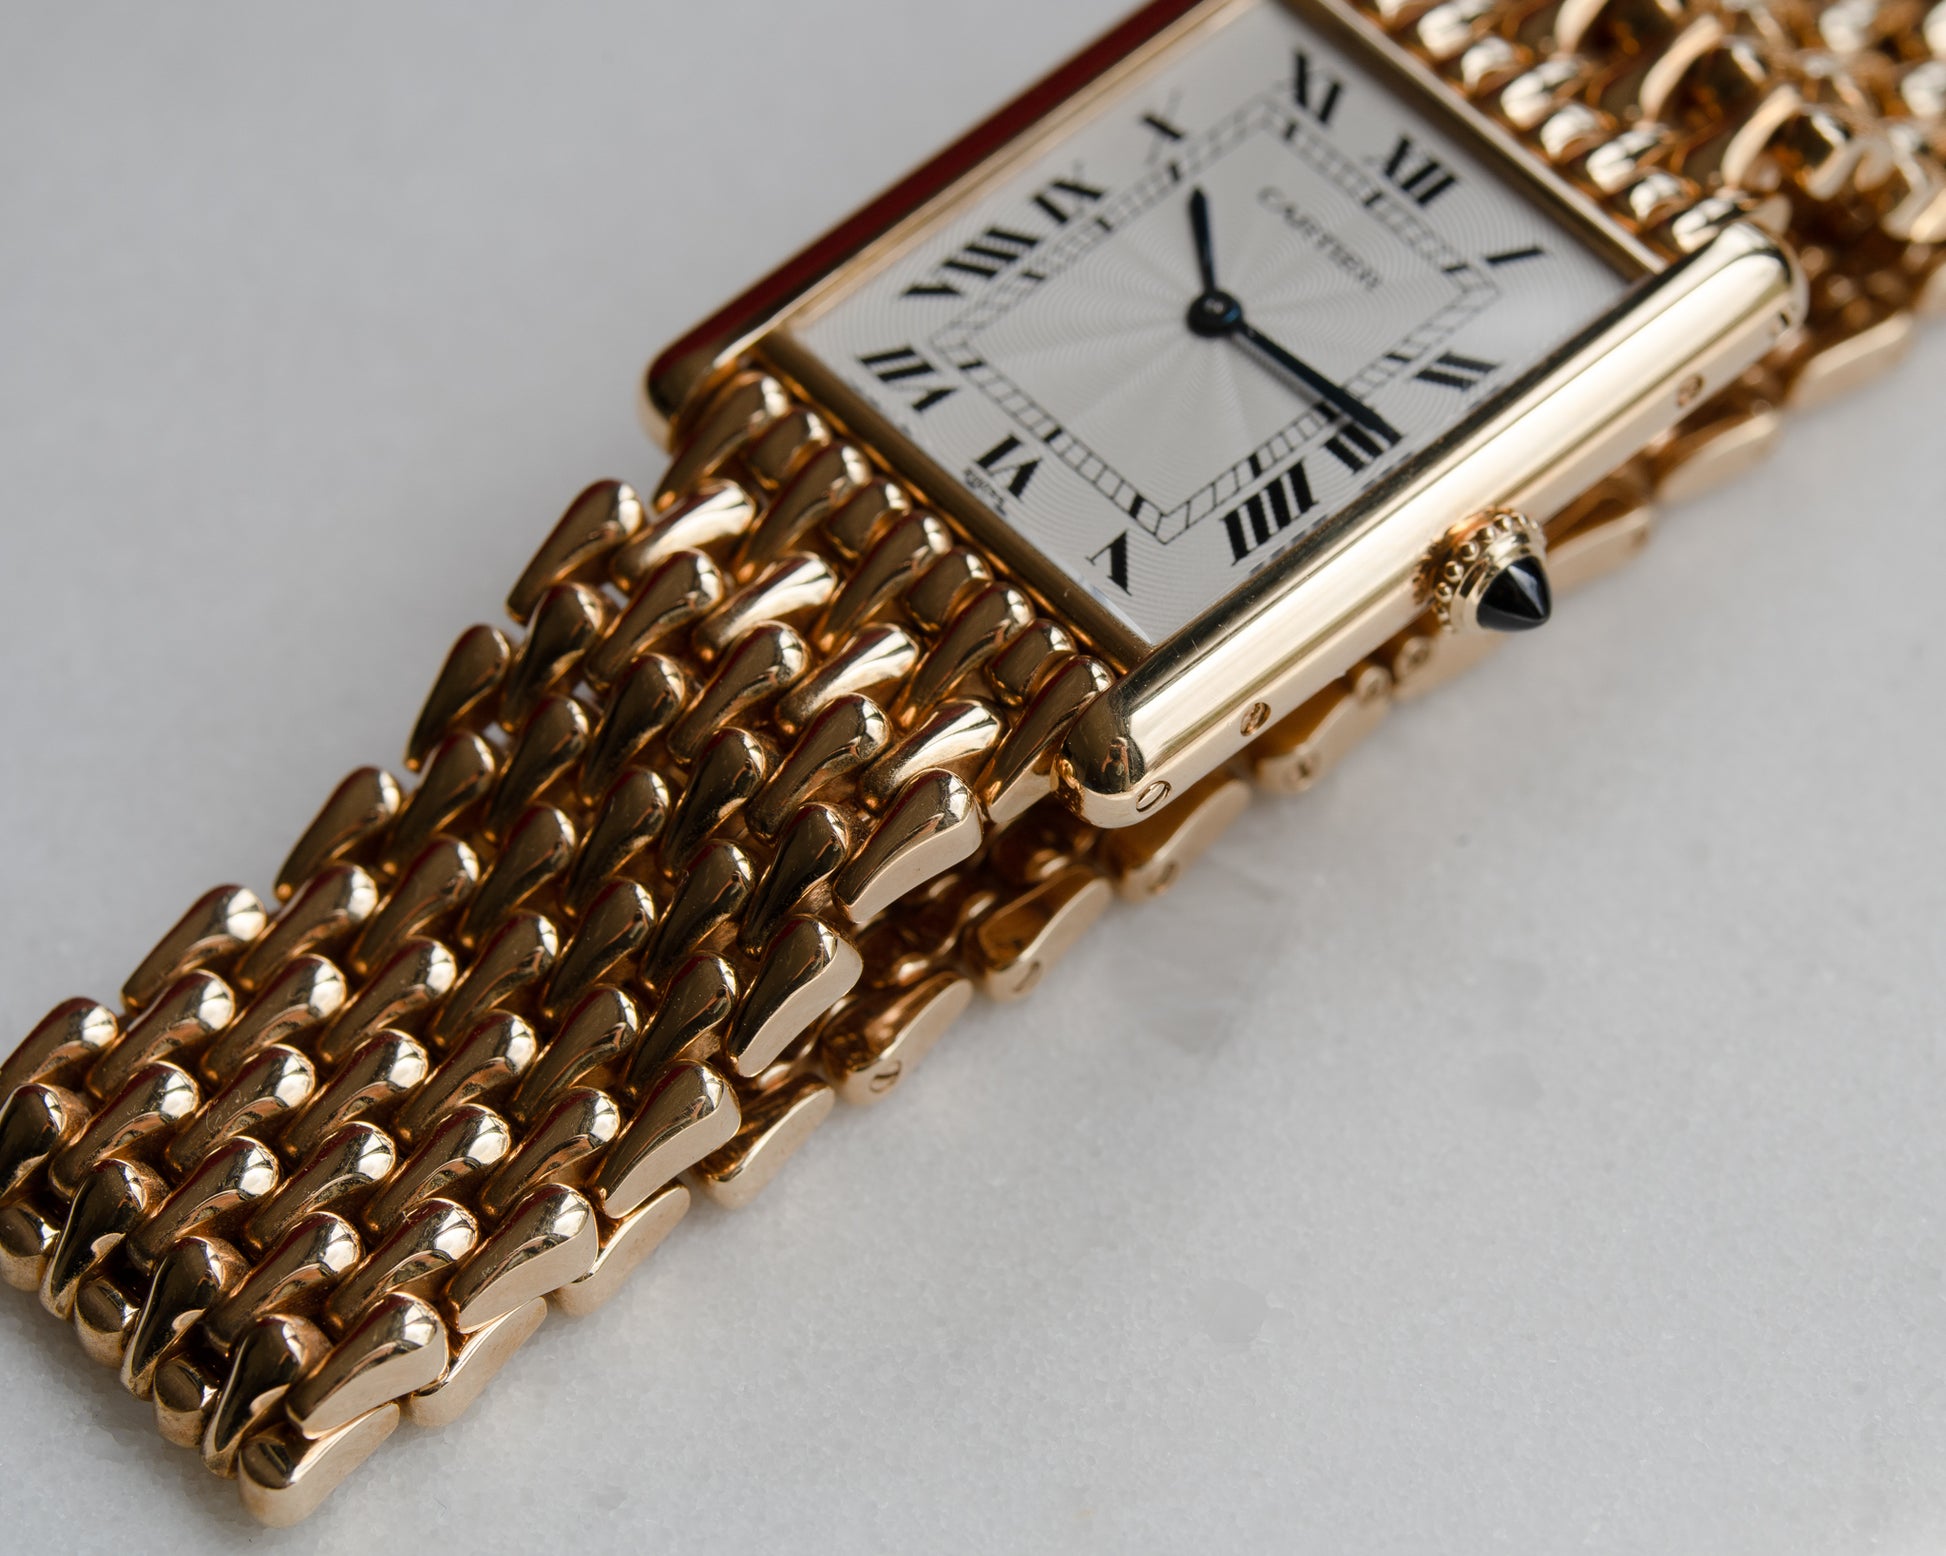 Cartier Tank Louis Extra Flat in YG with tear drop Gold bracelet